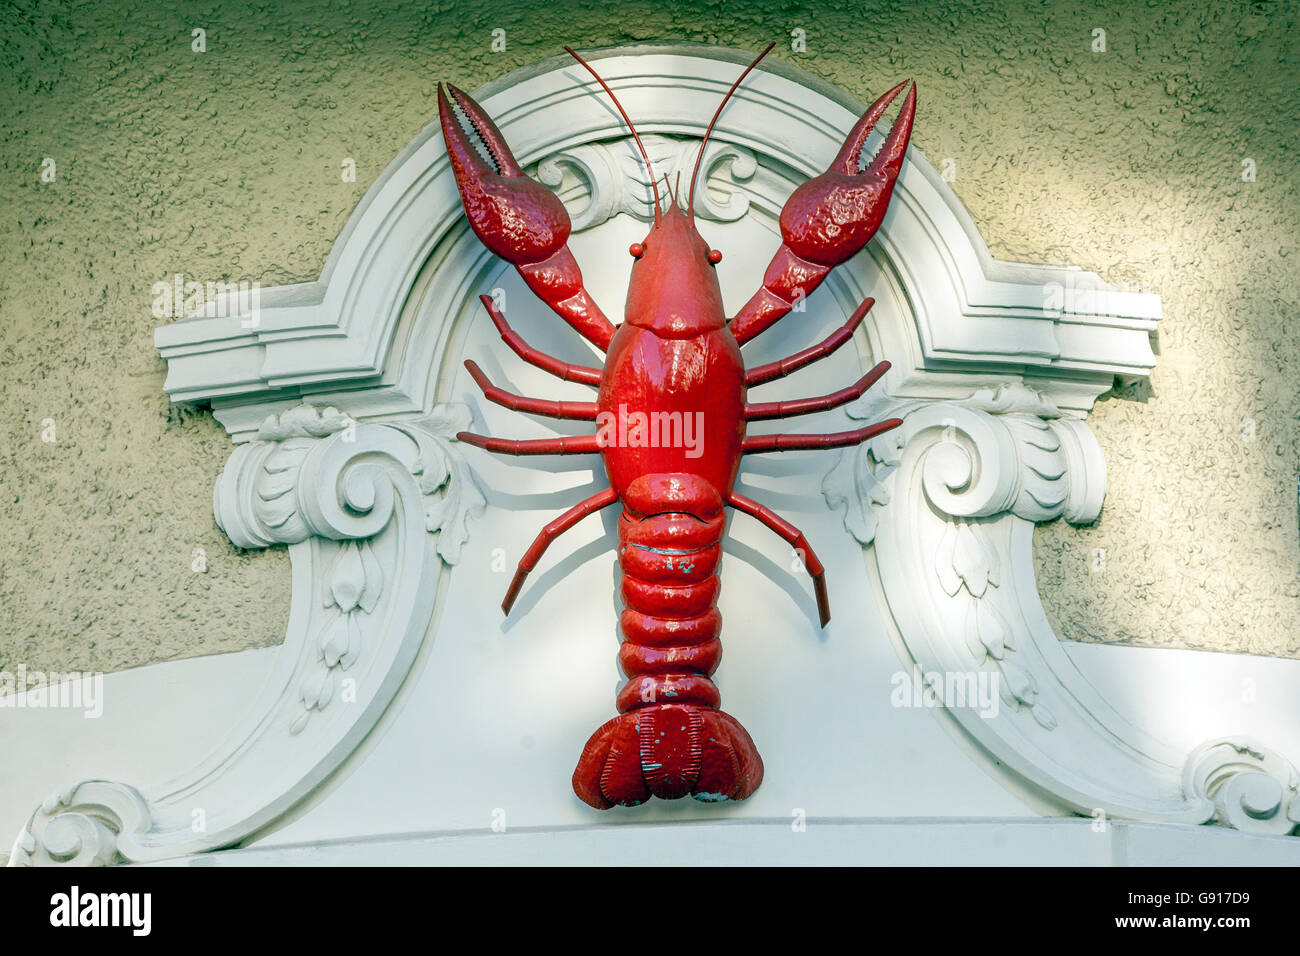 Red Crayfish, Brno house sign Brno Czech Republic Stock Photo